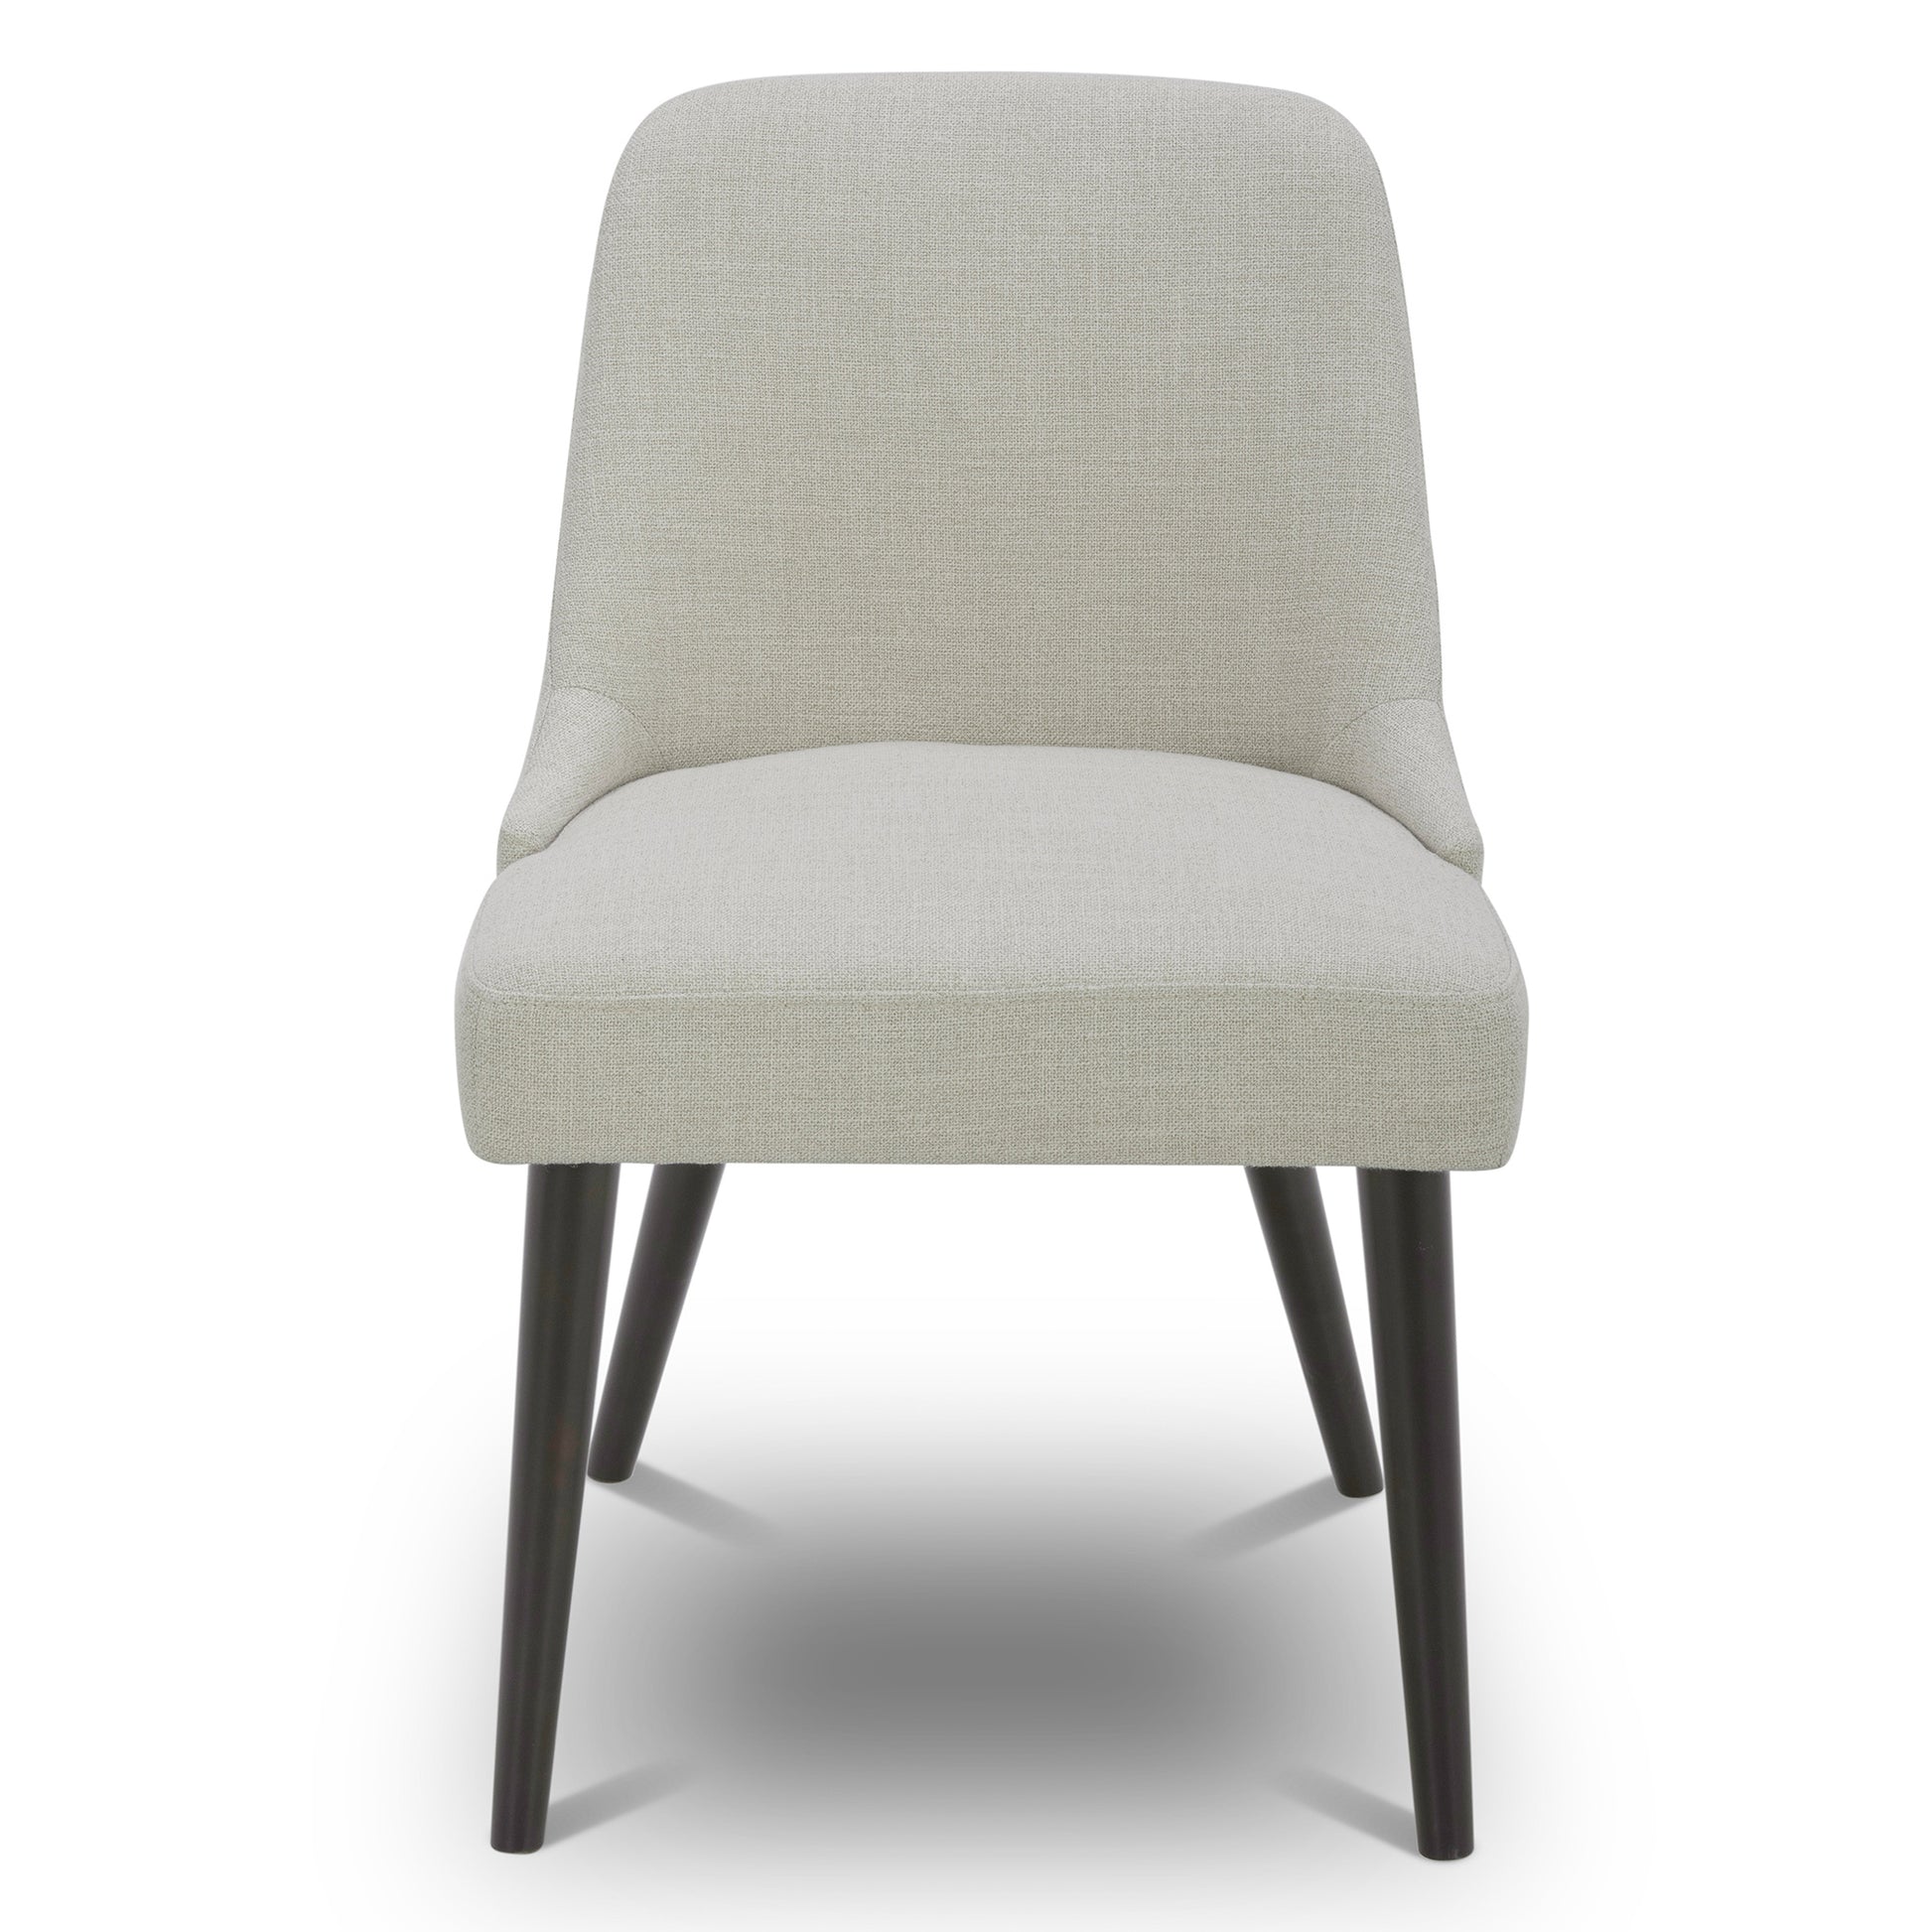 CHITA LIVING-Rhett Dining Chair (Set of 2)-Dining Chairs-Performance Fabric-Linen-